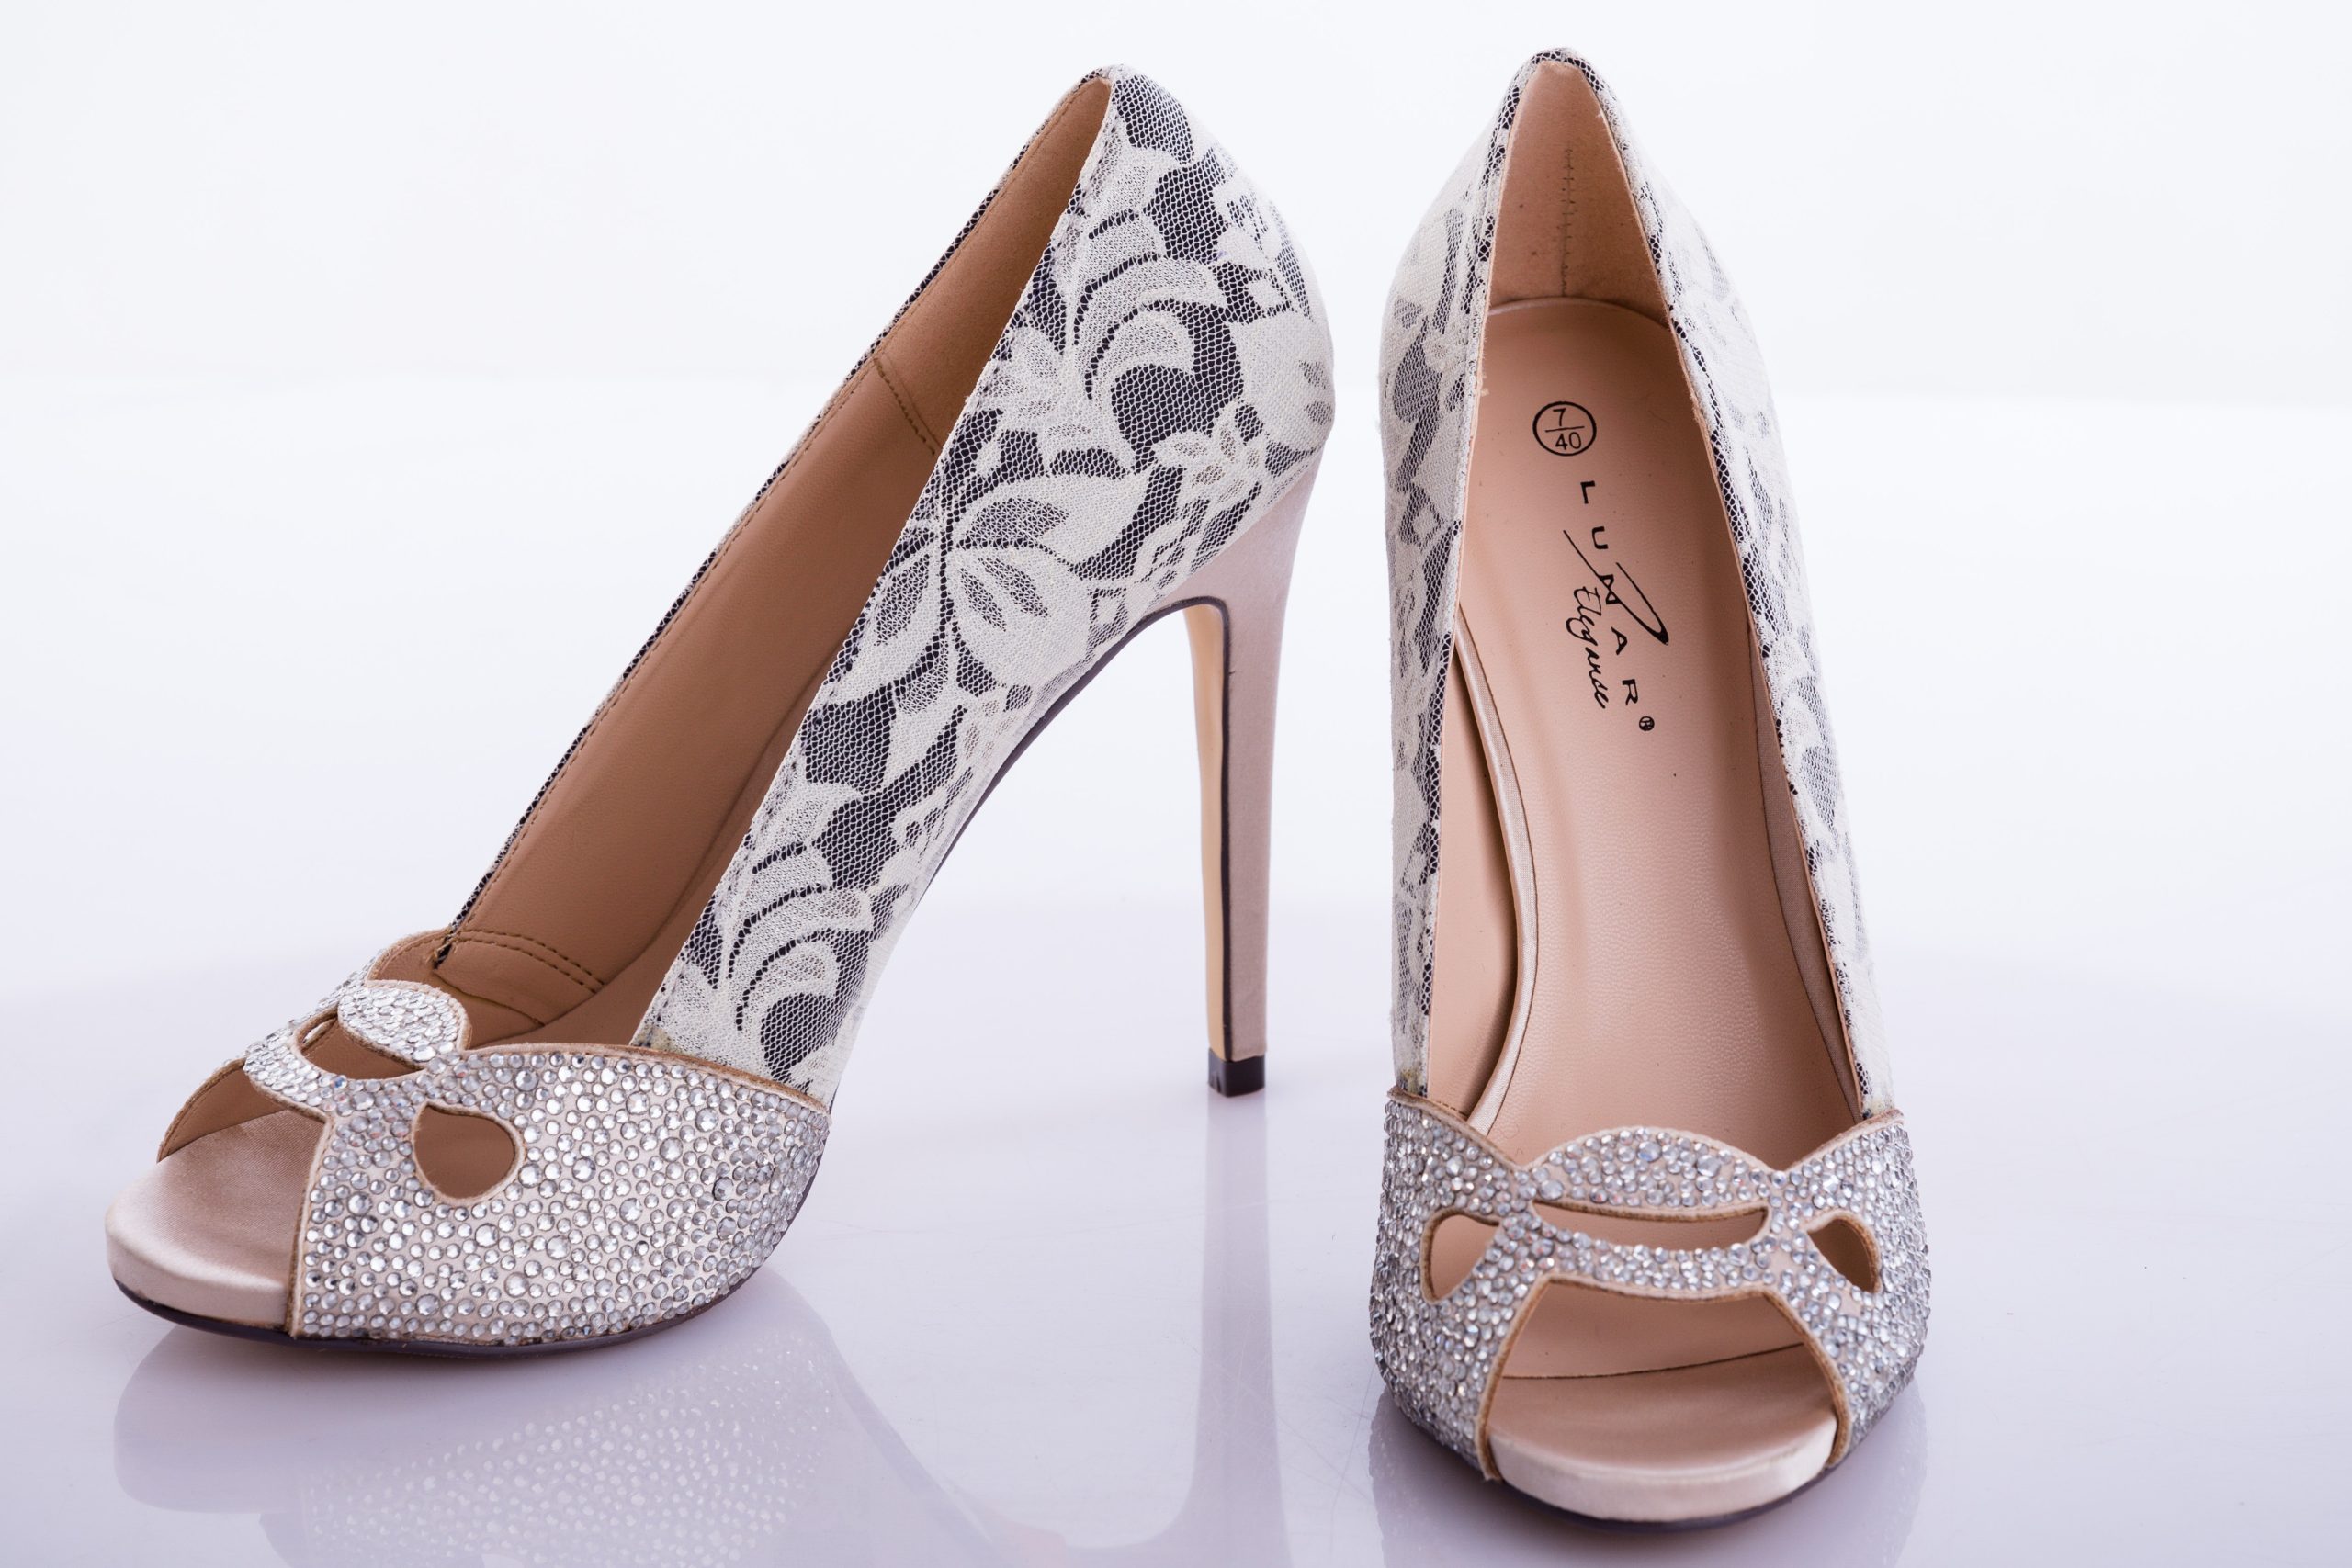 A pair of beautiful diamond studded italian shoes.